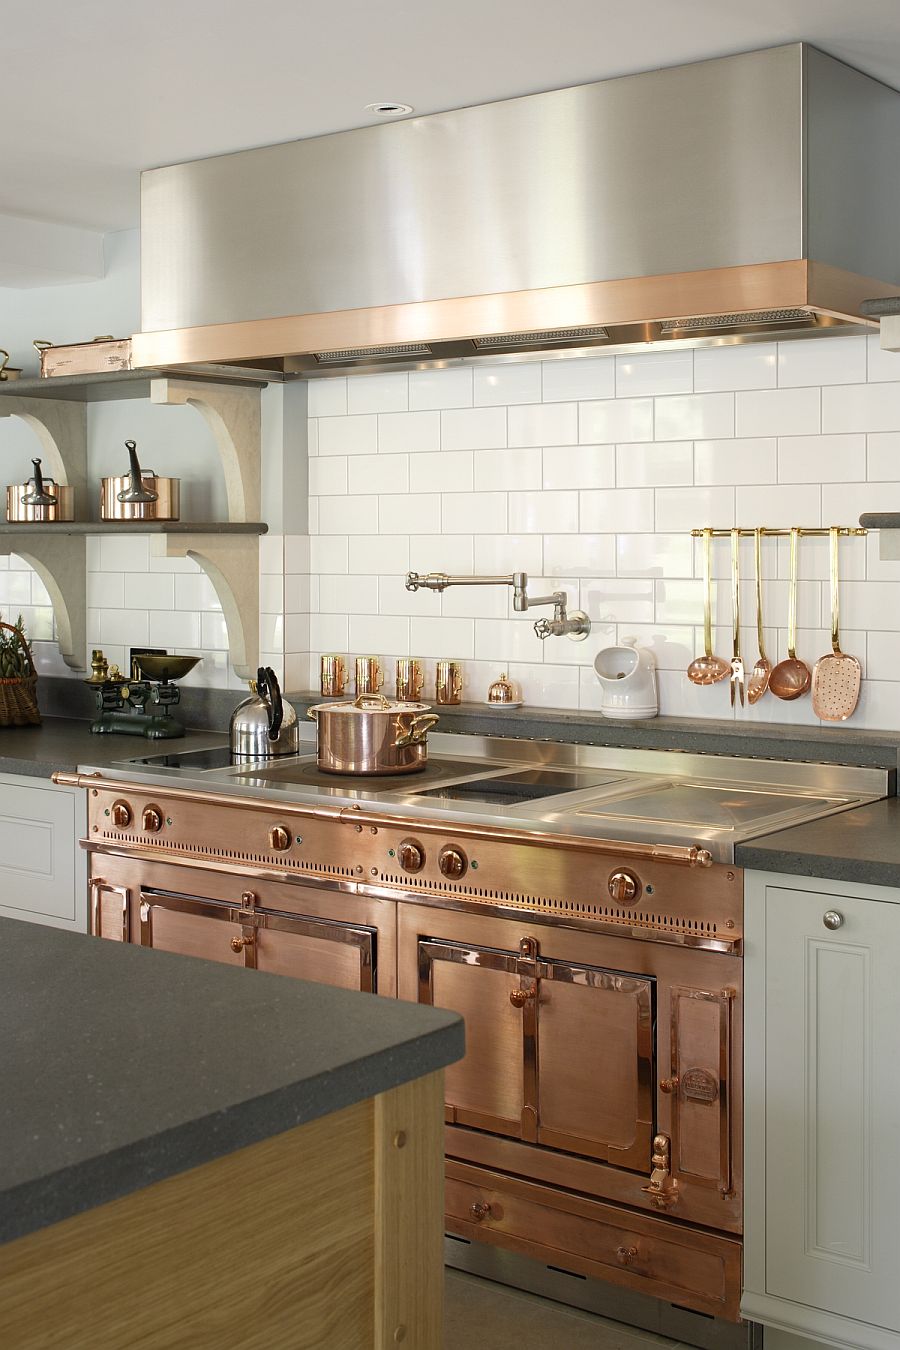 Custom copper and stainless steel La Cornue range in the bespoke kitchen